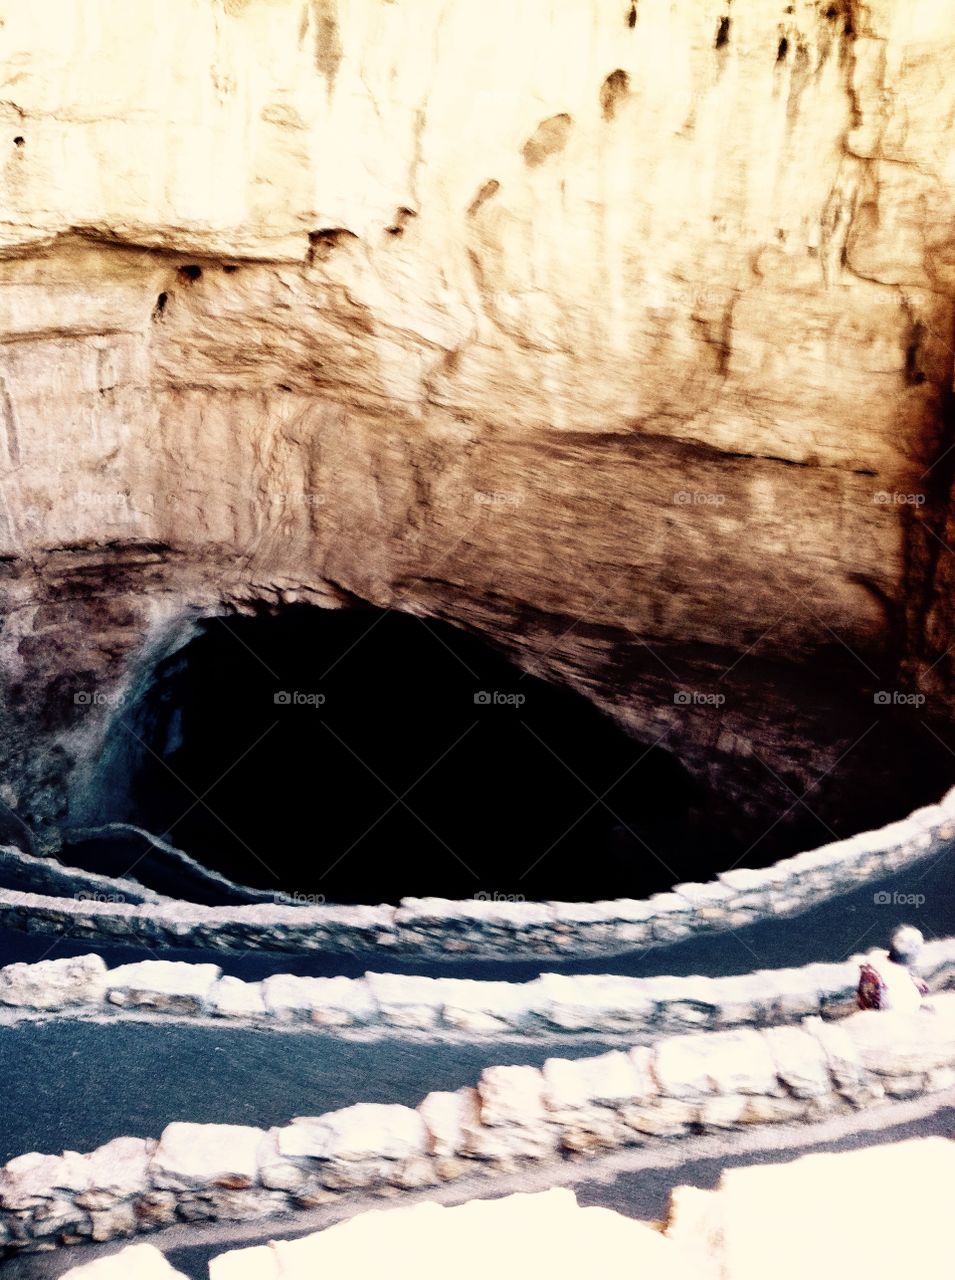 Cavern opening